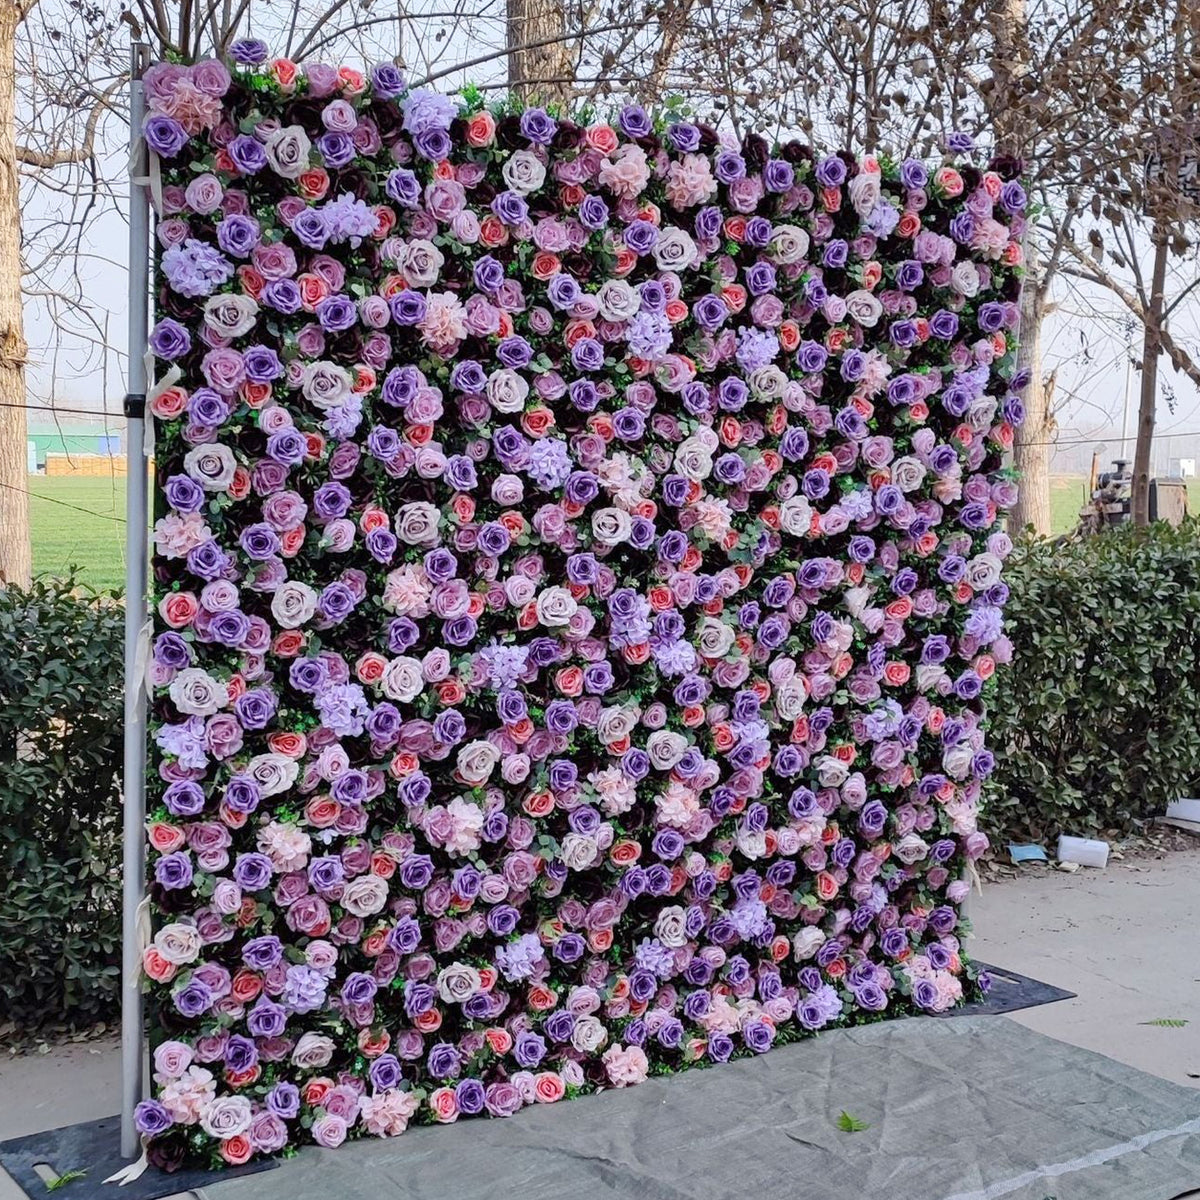 3D Artificial Flower Wall Arrangement Wedding Party Birthday Backdrop Decor HQ3935